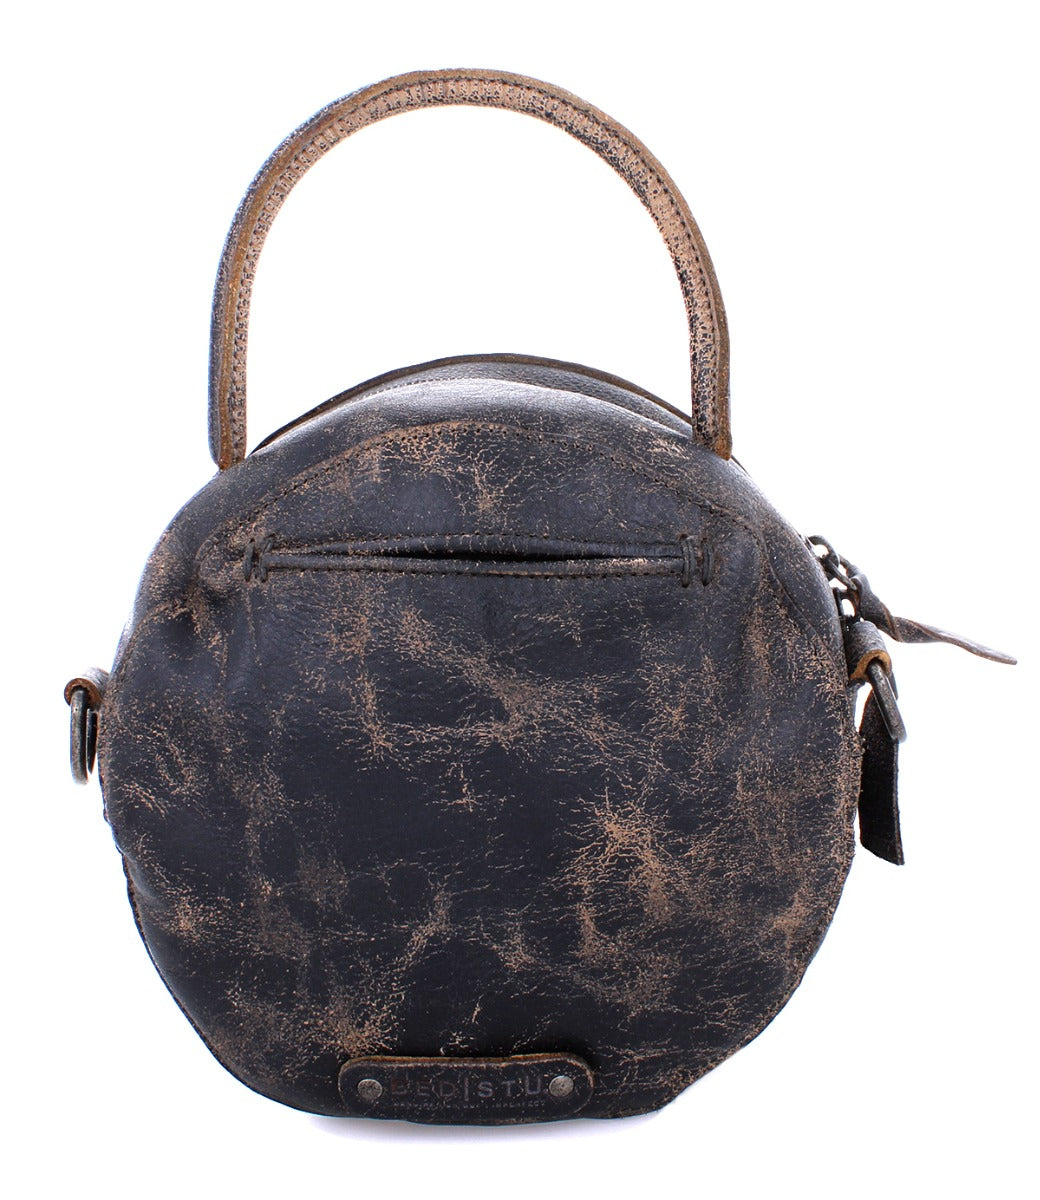 The back of a Bed Stu Arenfield black leather handbag.